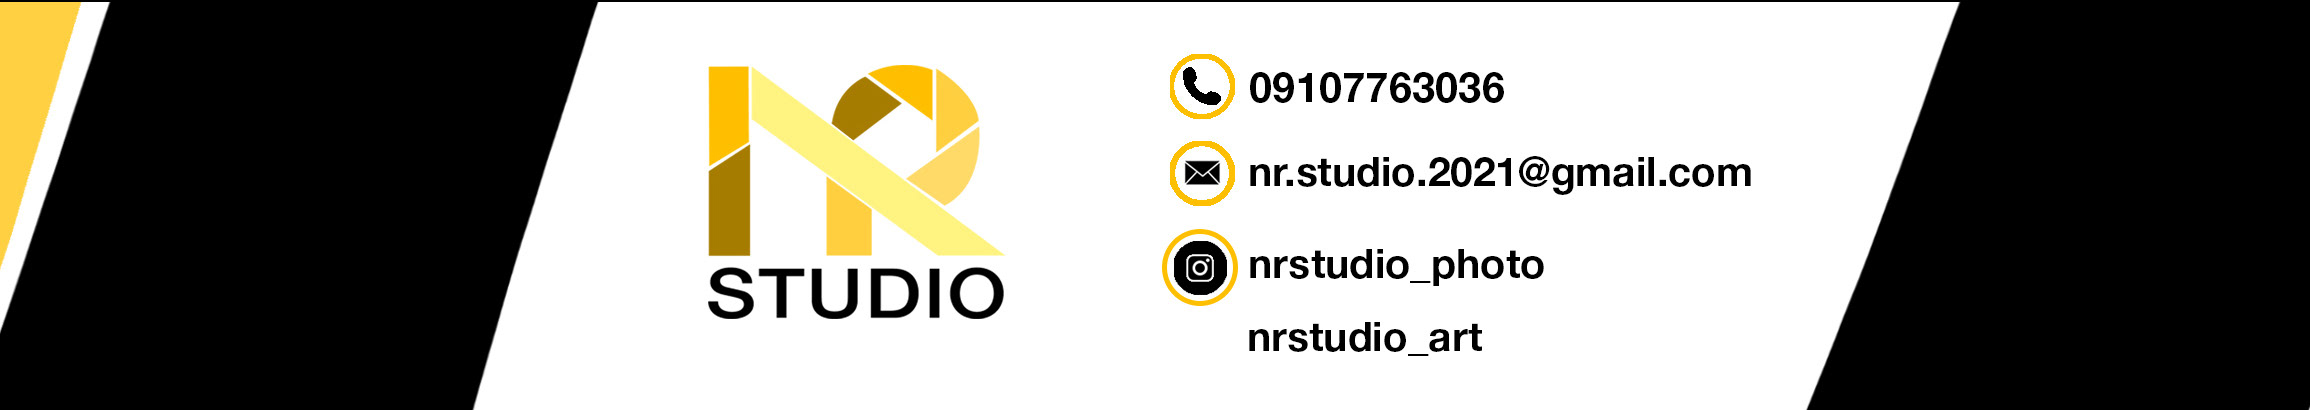 NR Studio's profile banner